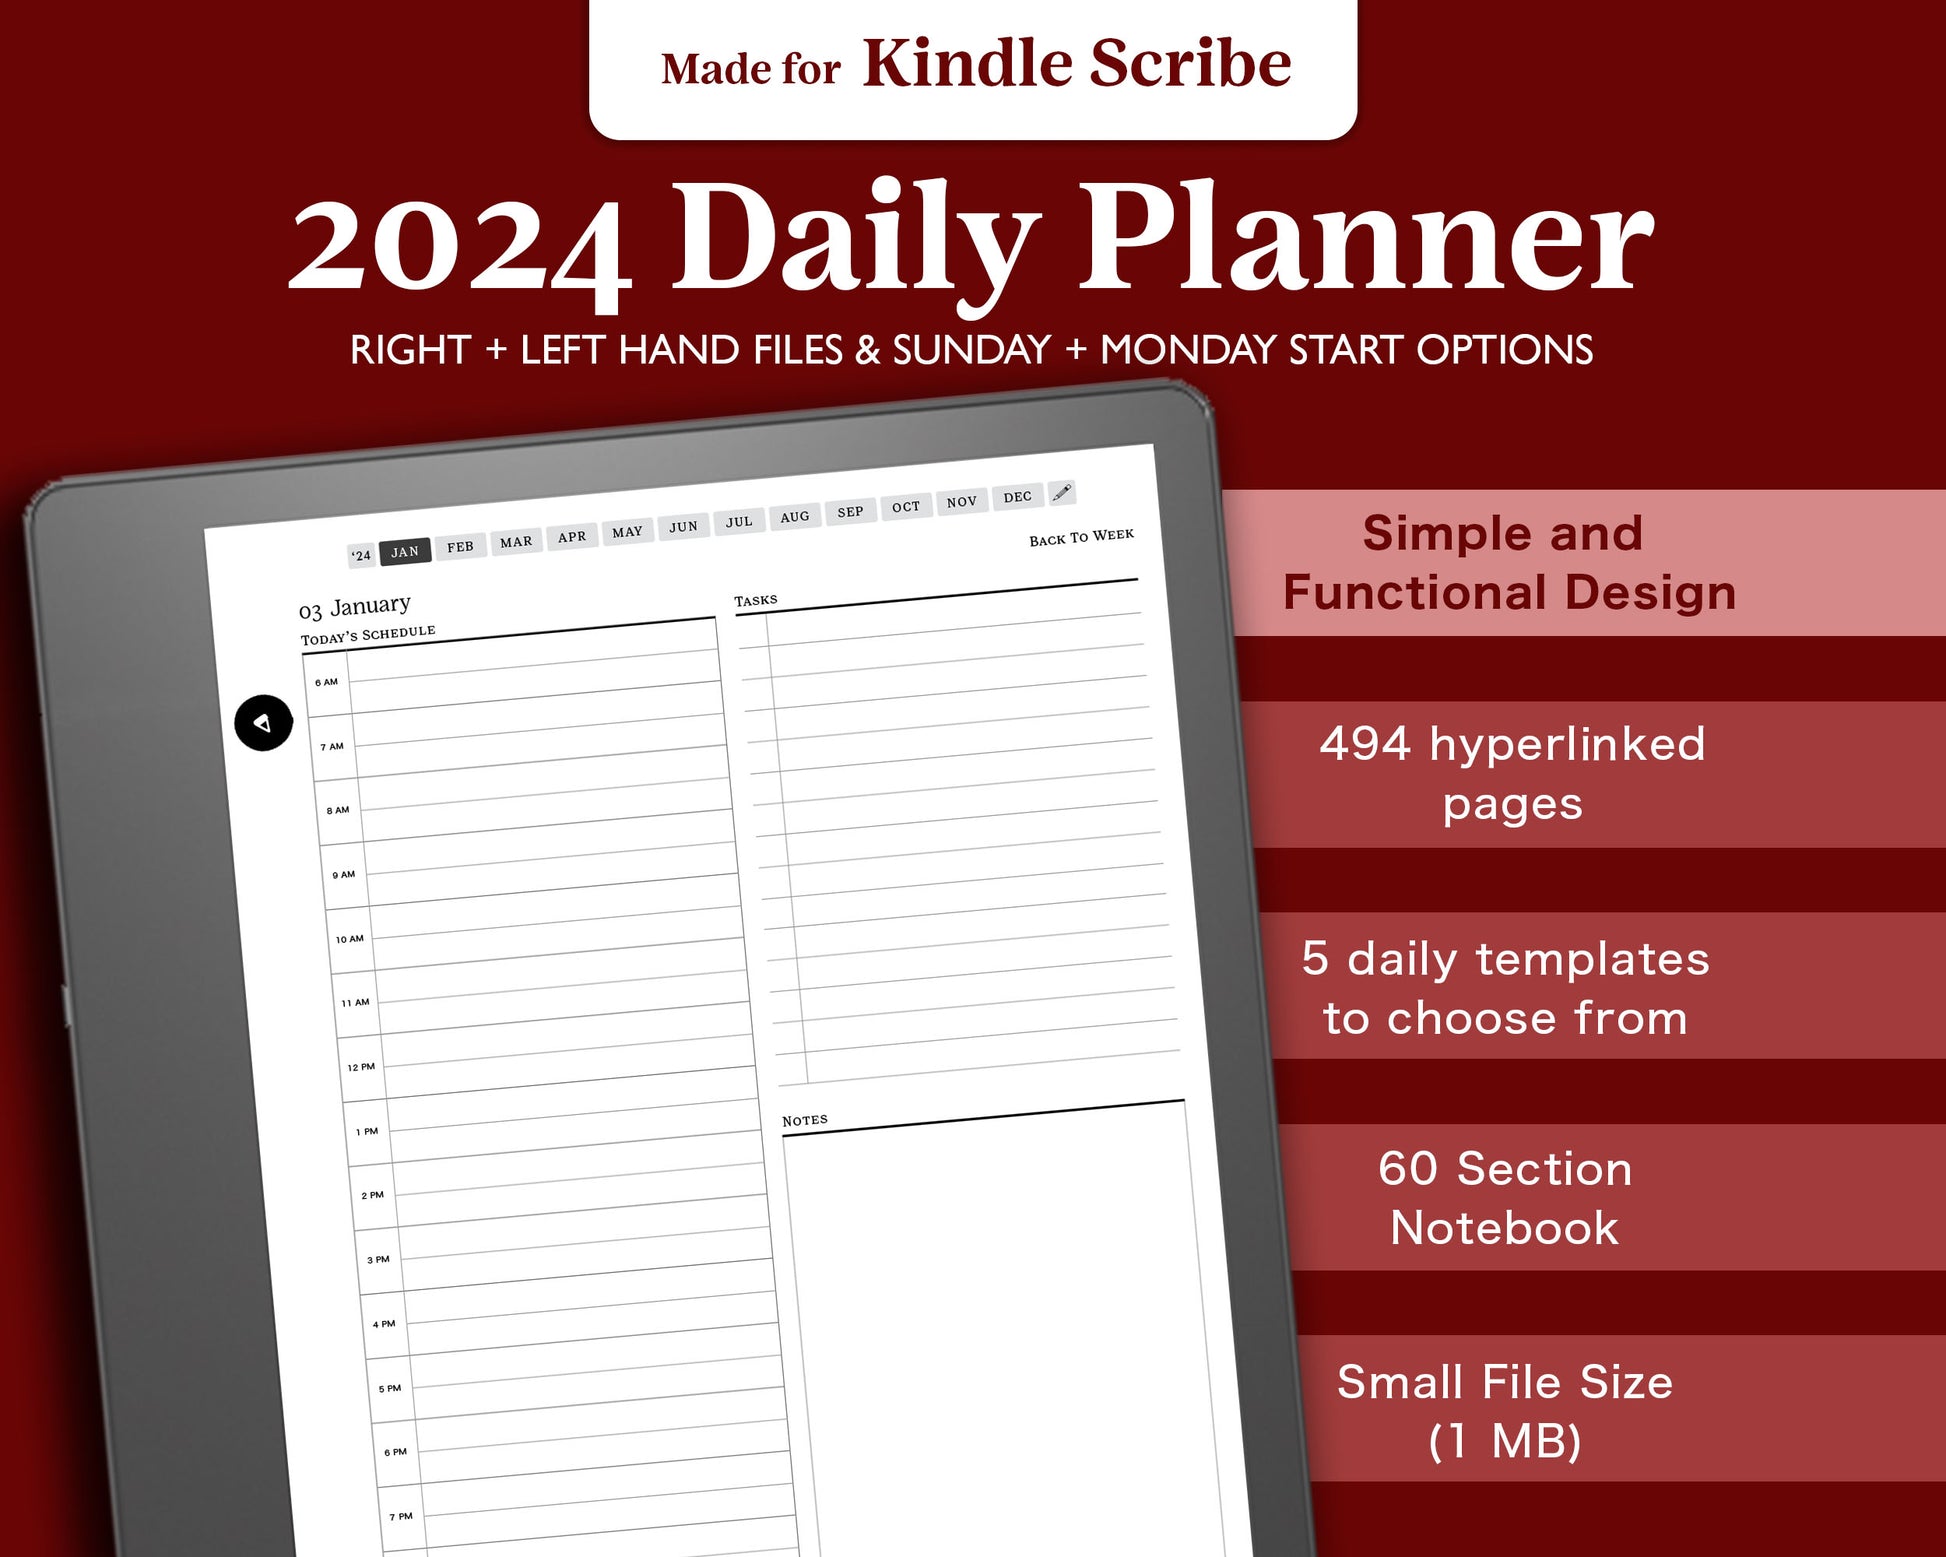 2024 Digital Kindle Scribe Planner